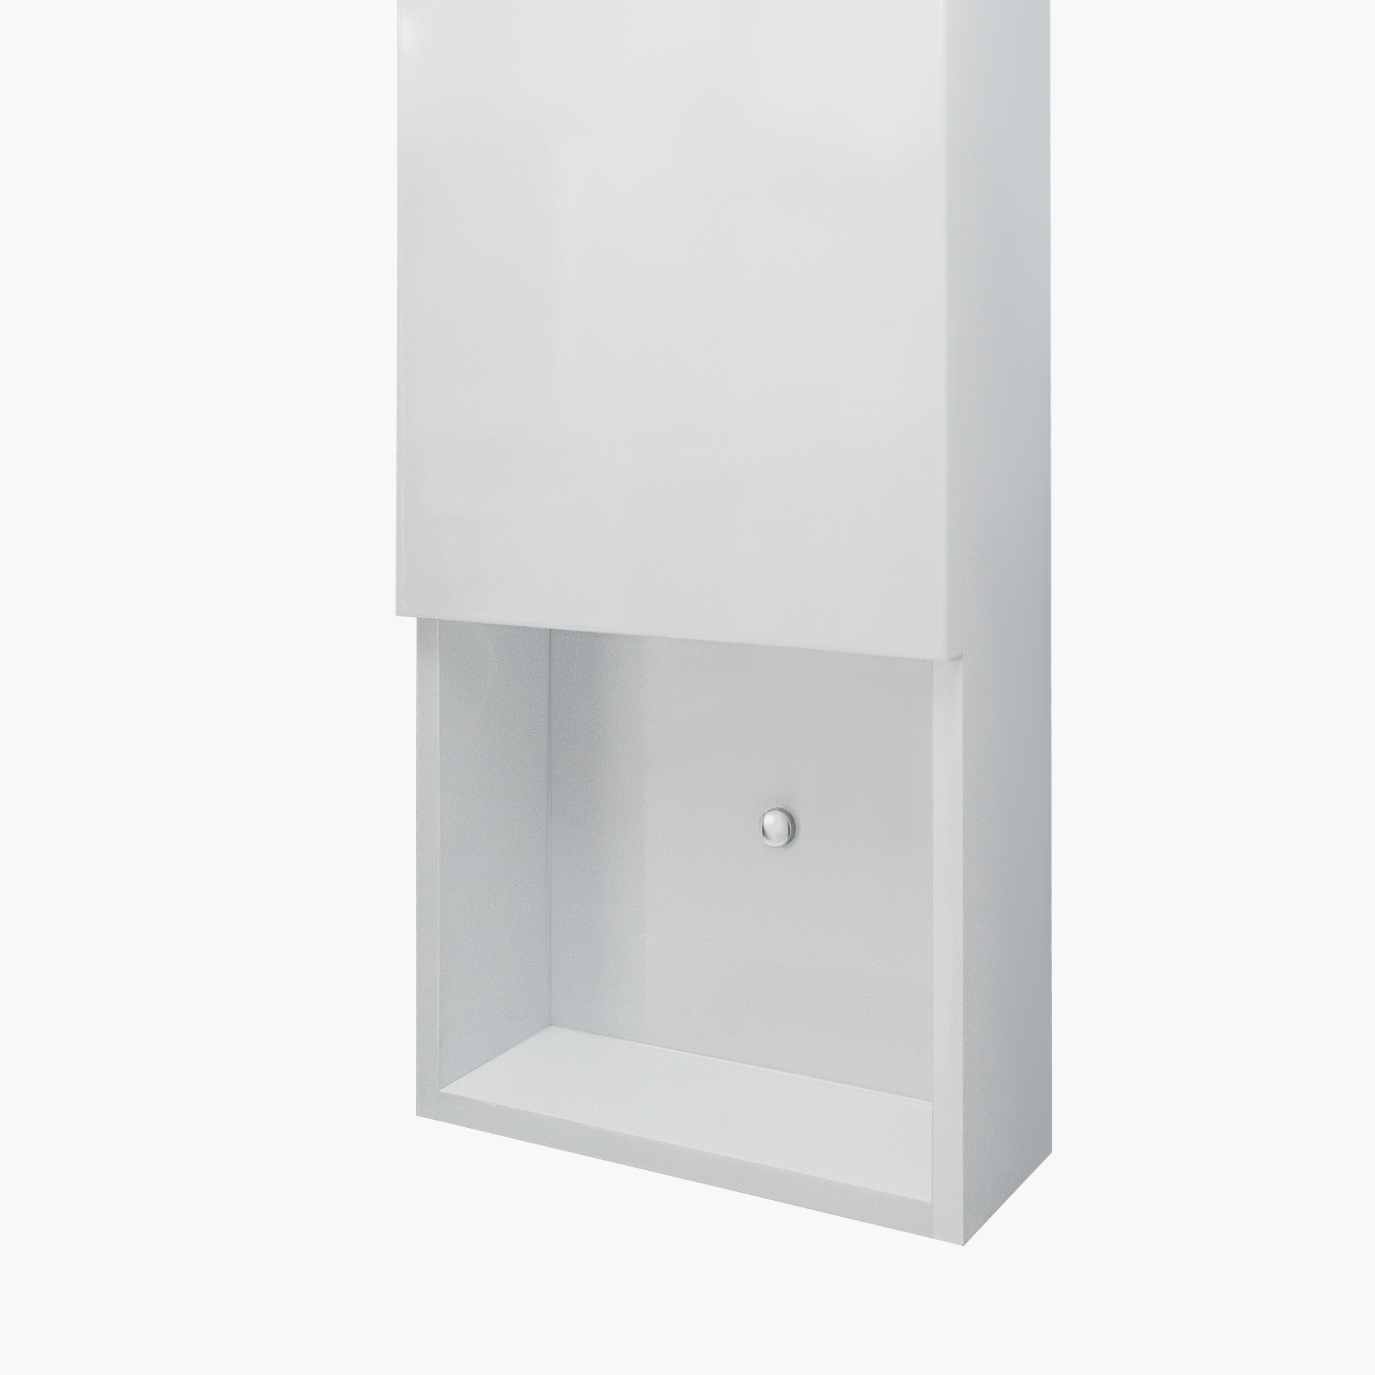 Ancona modern white bathroom wall cabinet